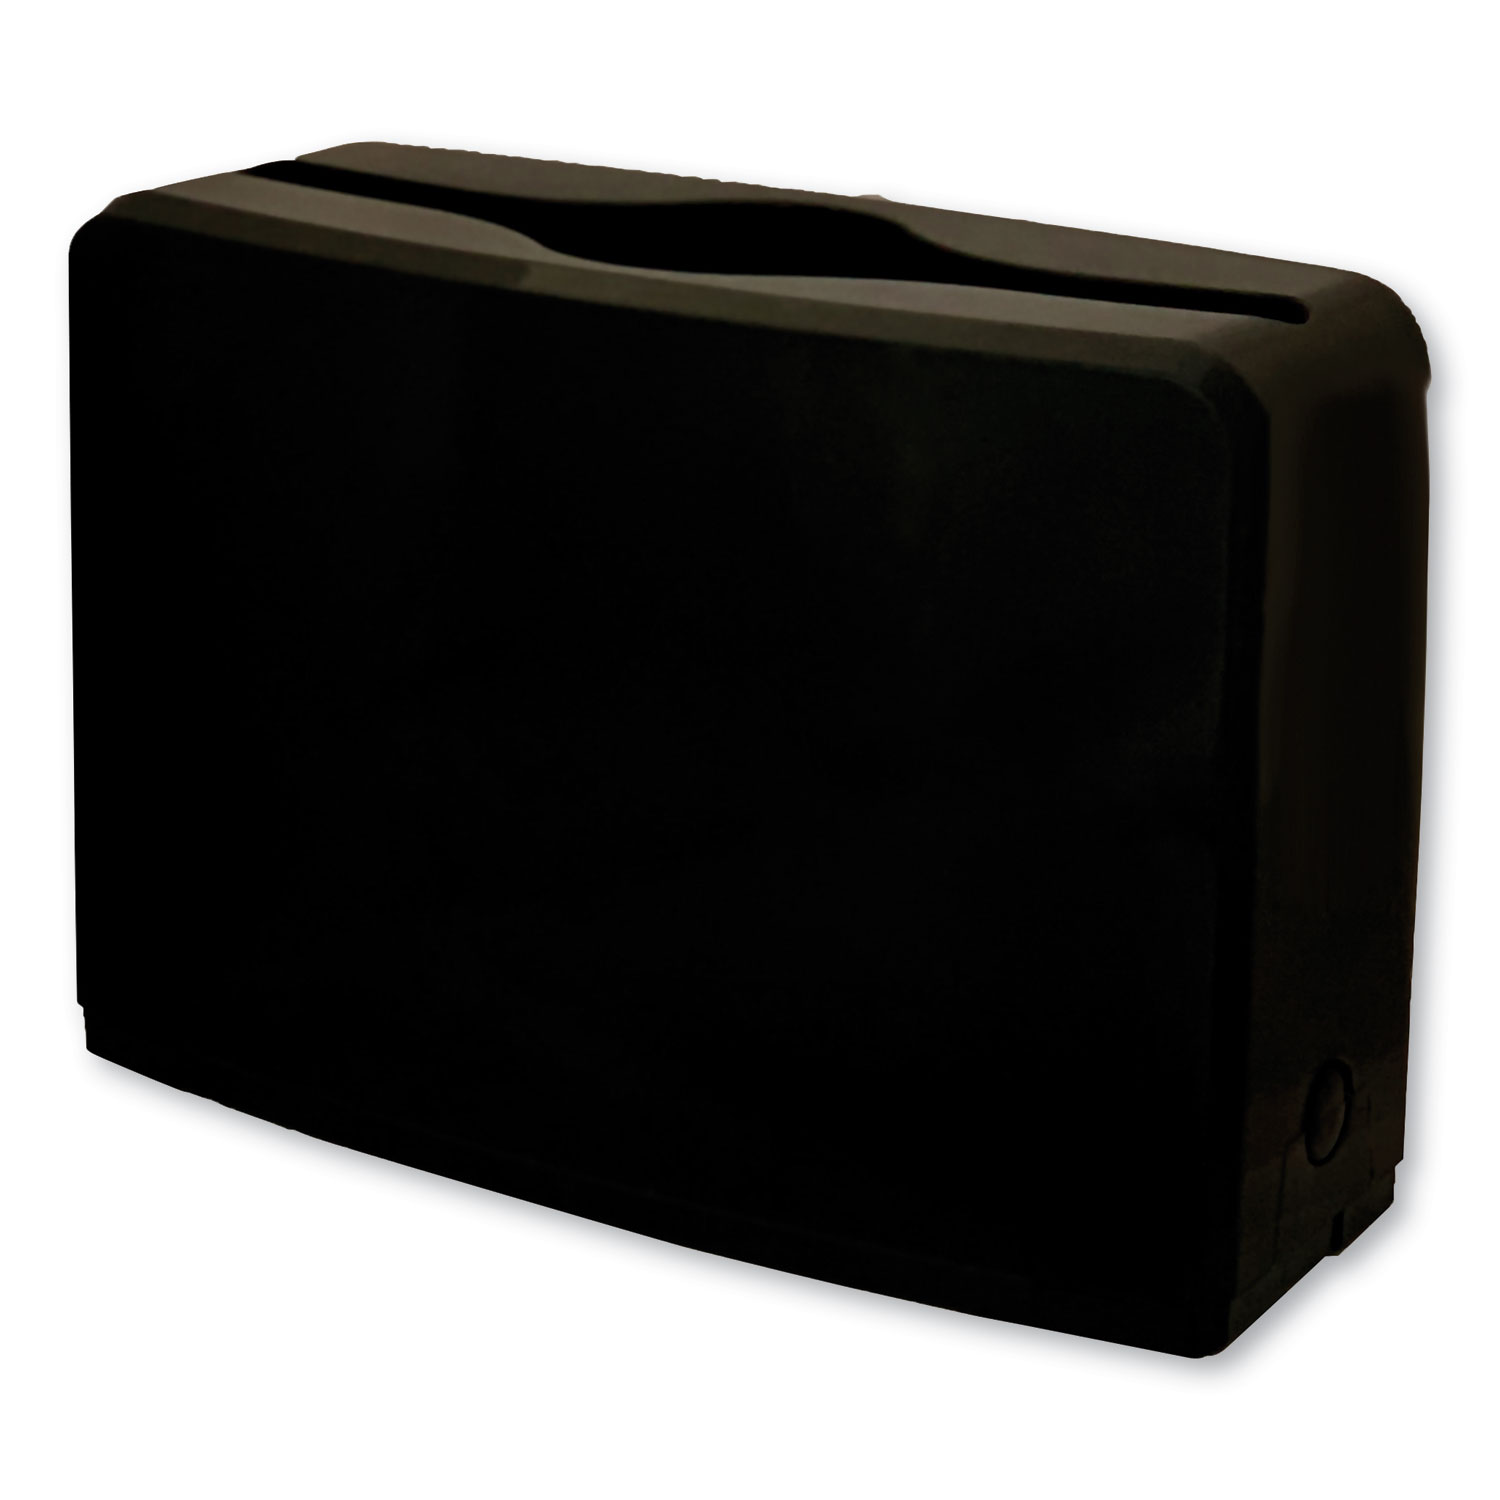  GEN AH52010 Countertop Folded Towel Dispenser, 10.63 x 7.28 x 4.53, Black (GEN1607) 